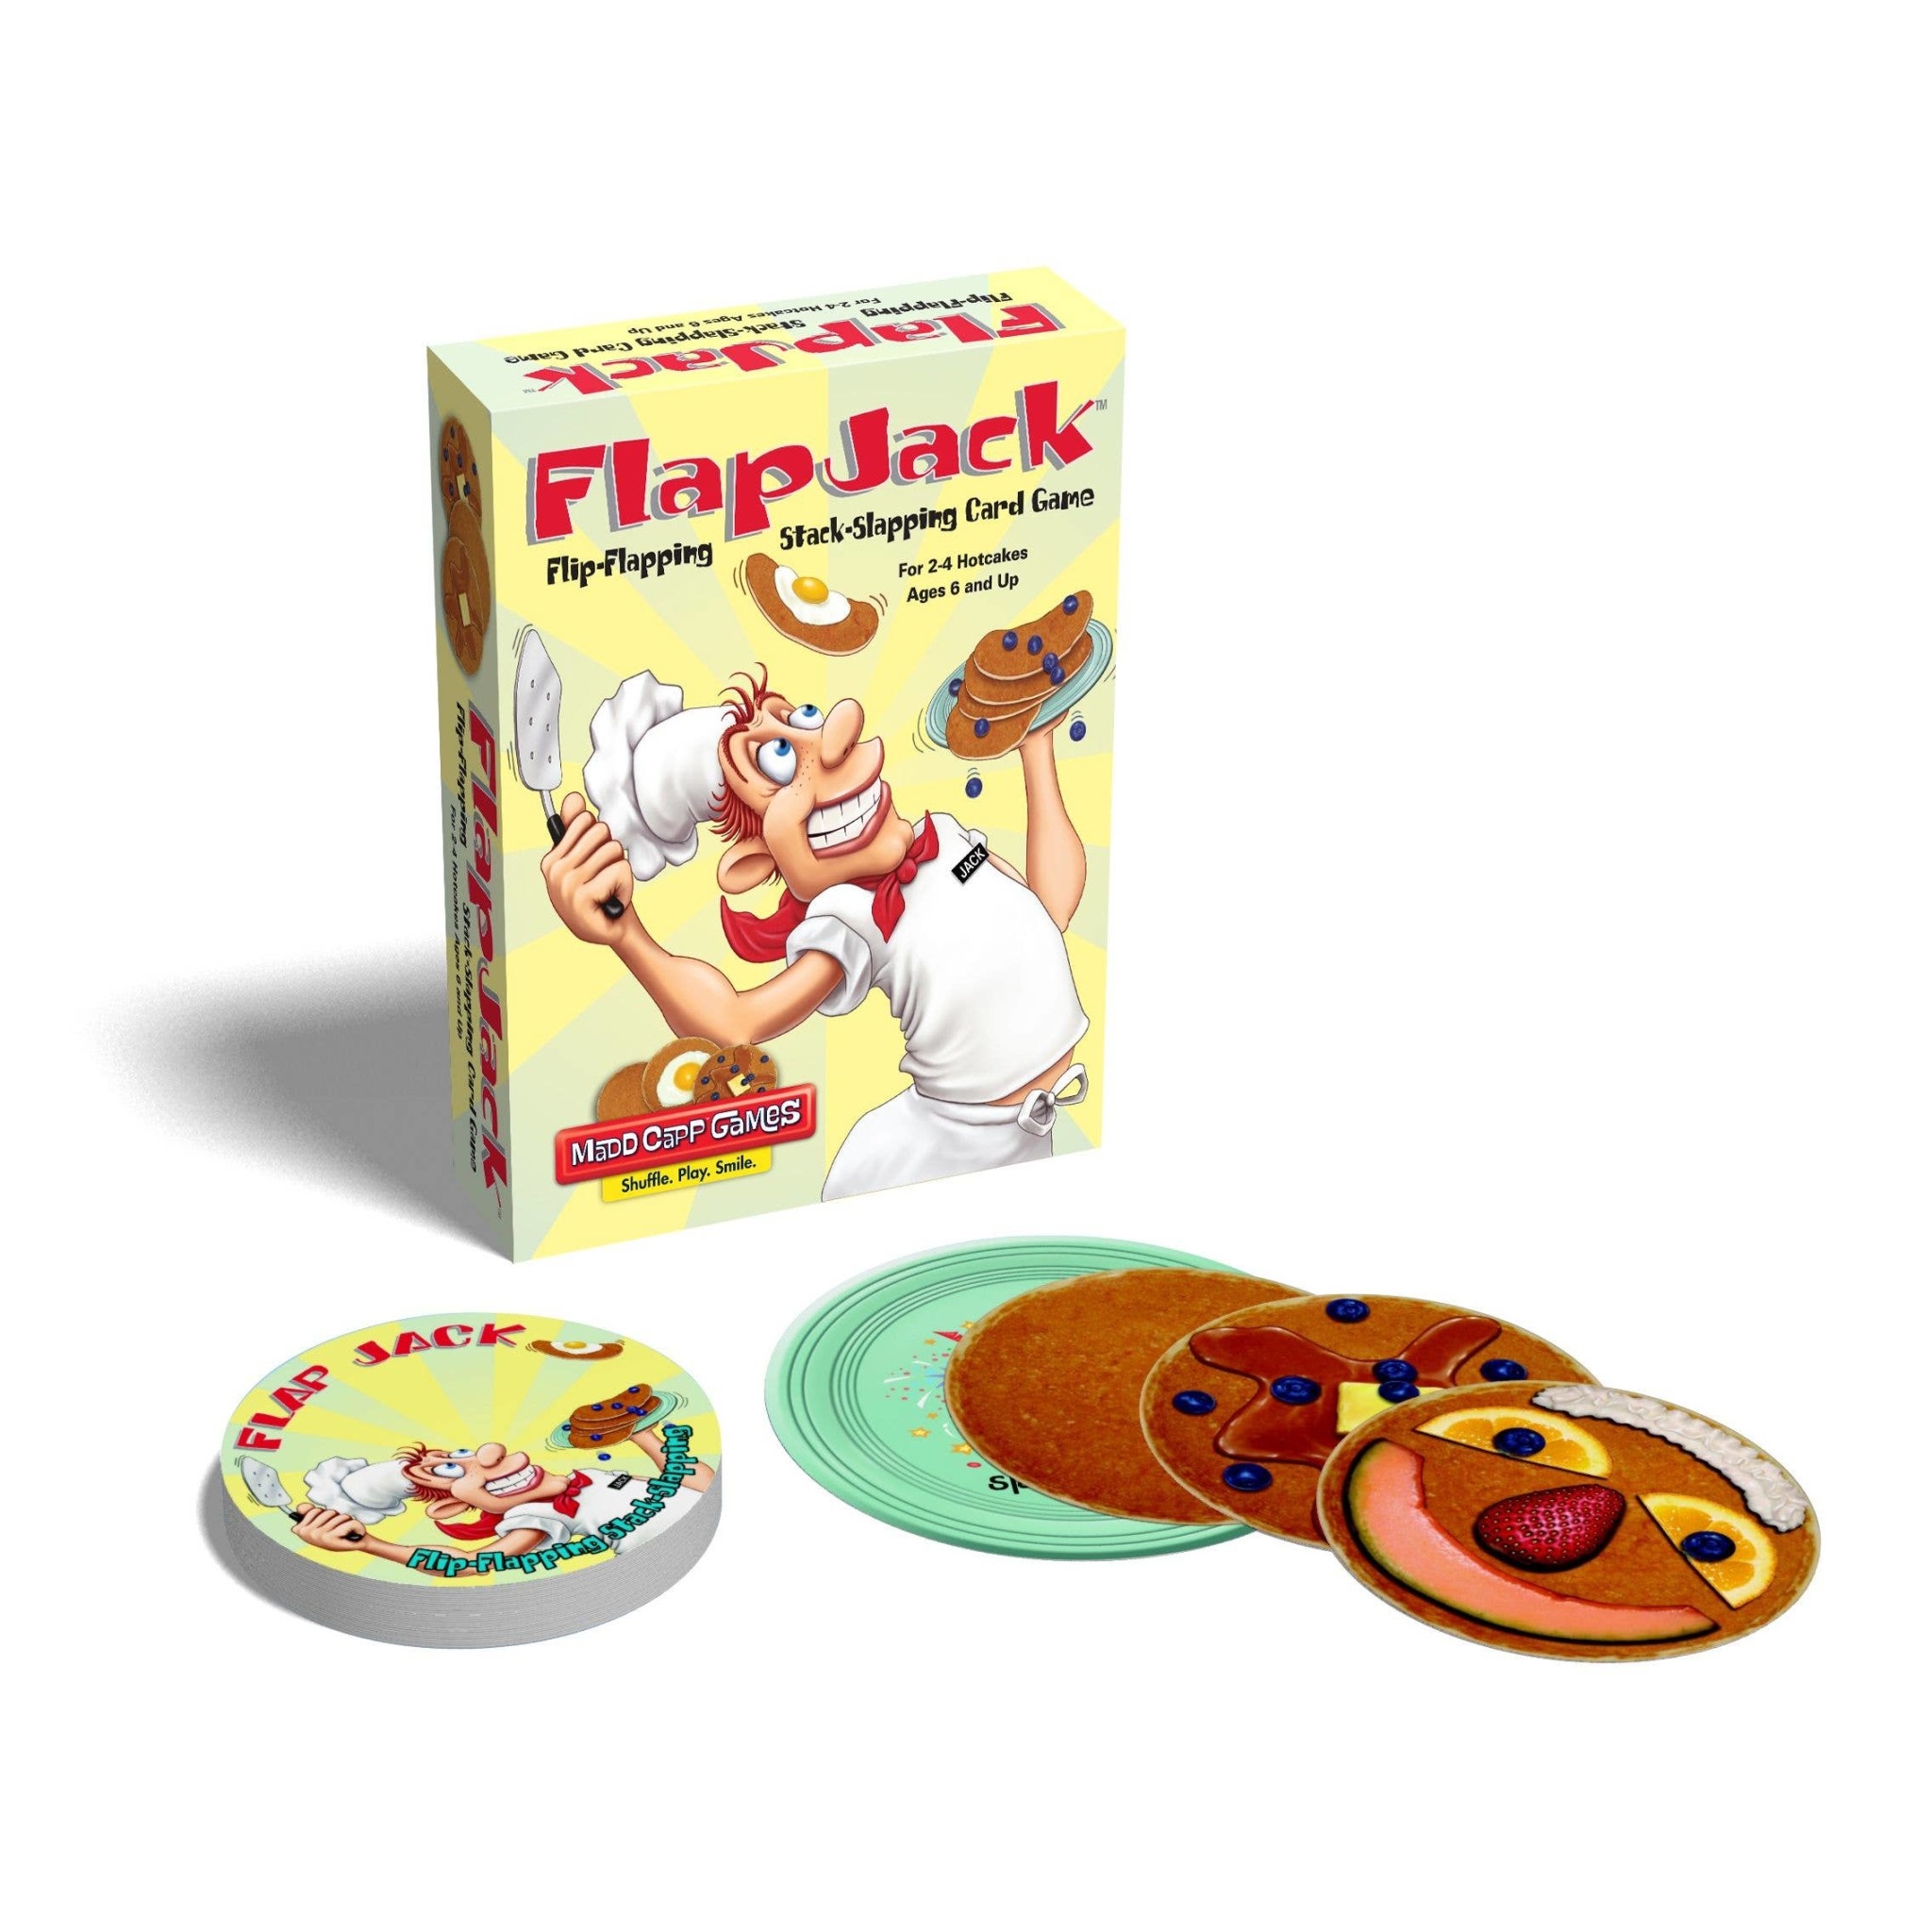 Madd Capp Games & Puzzles Madd Capp Card Games - Flap Jack